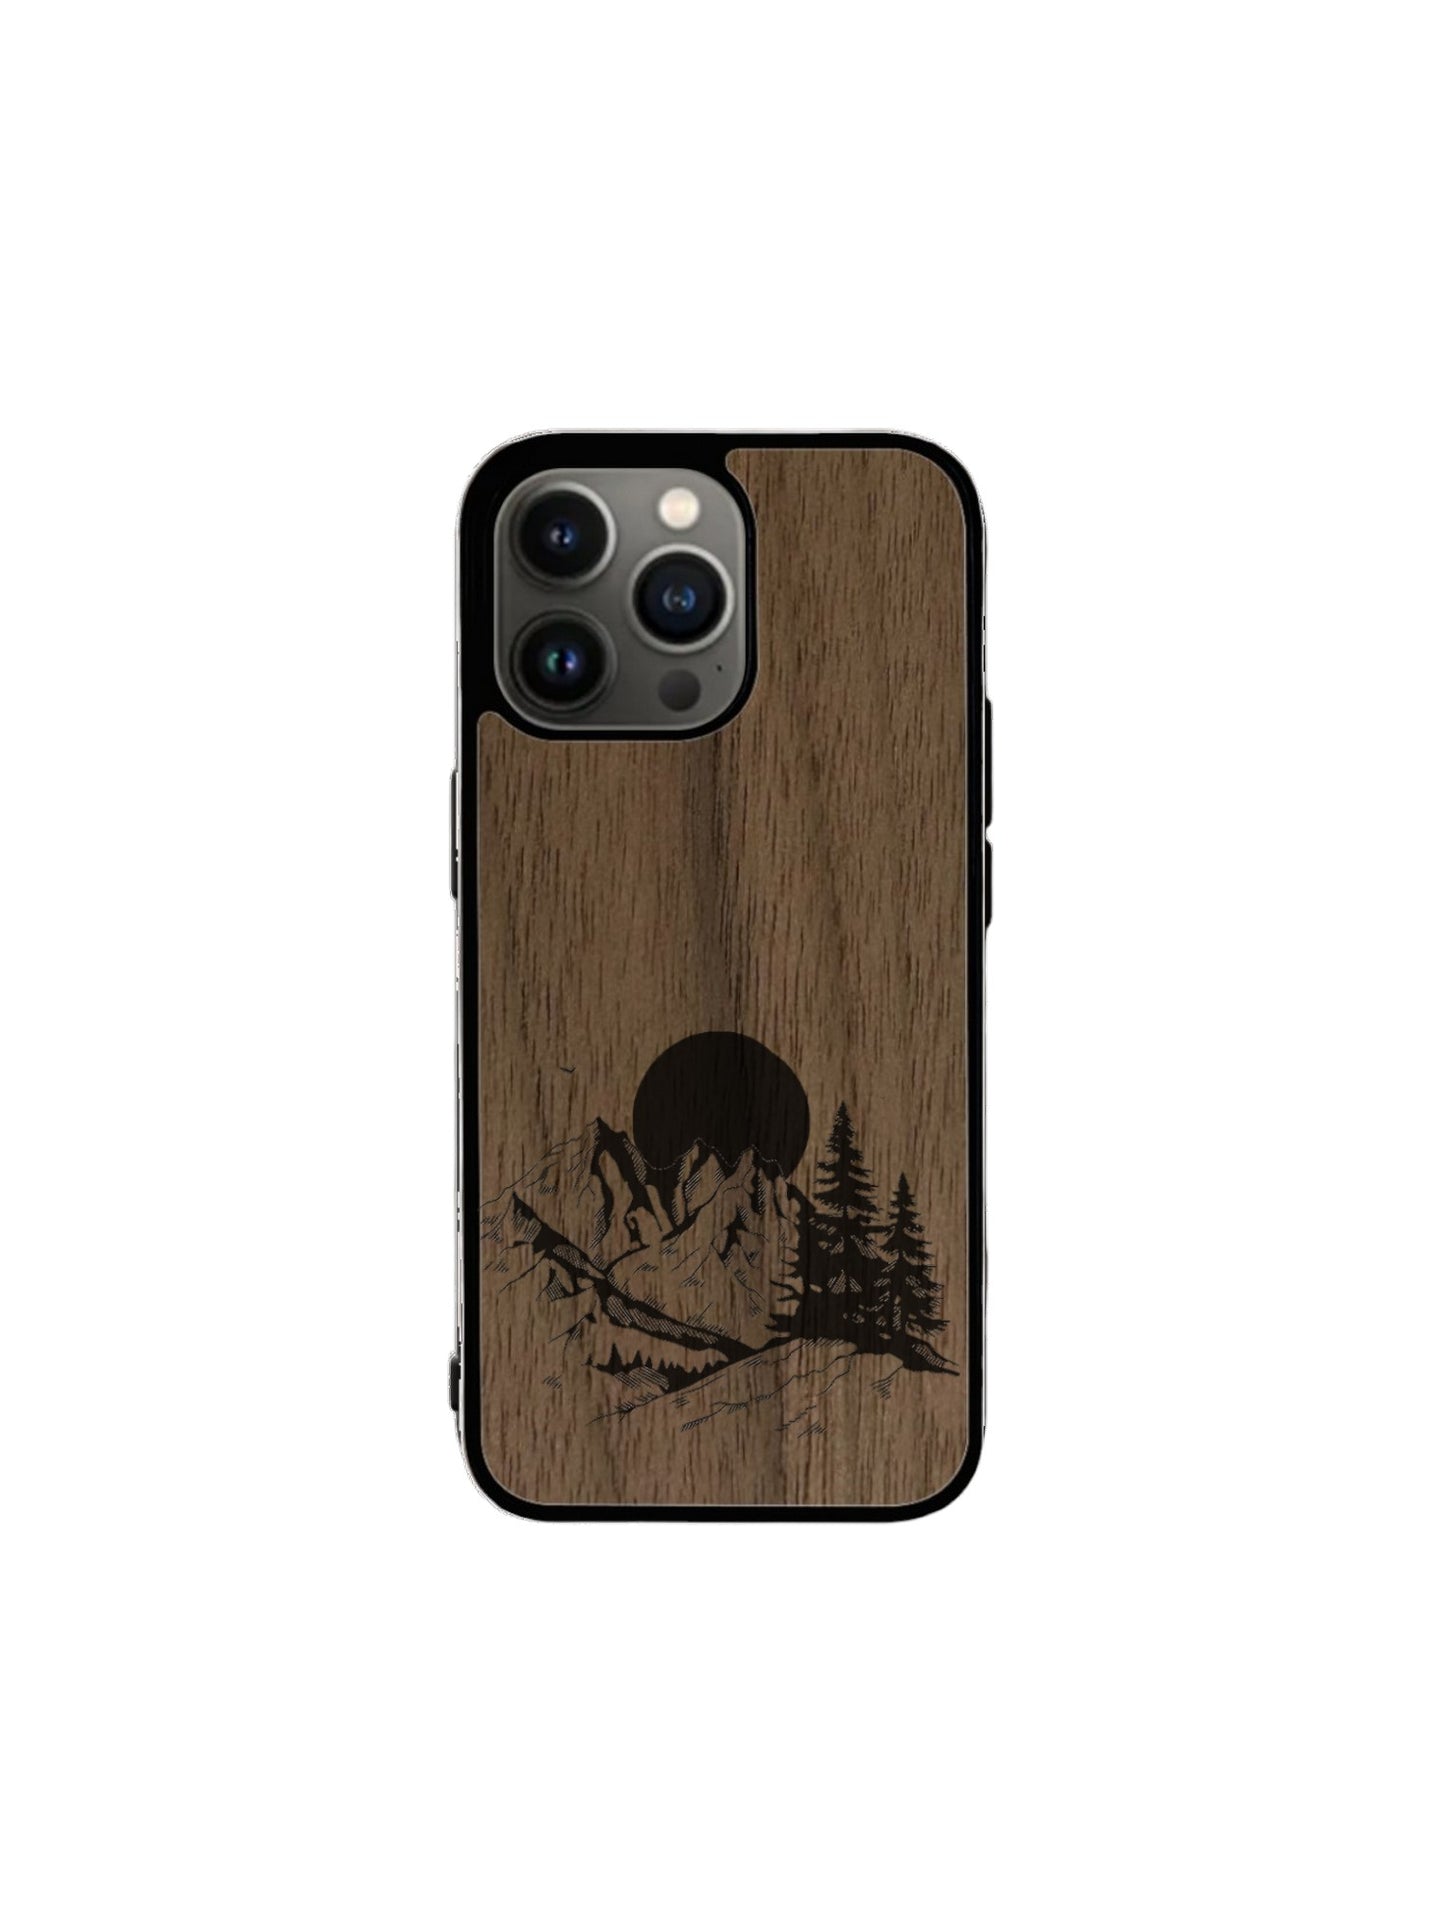 Iphone case - Mountain landscape